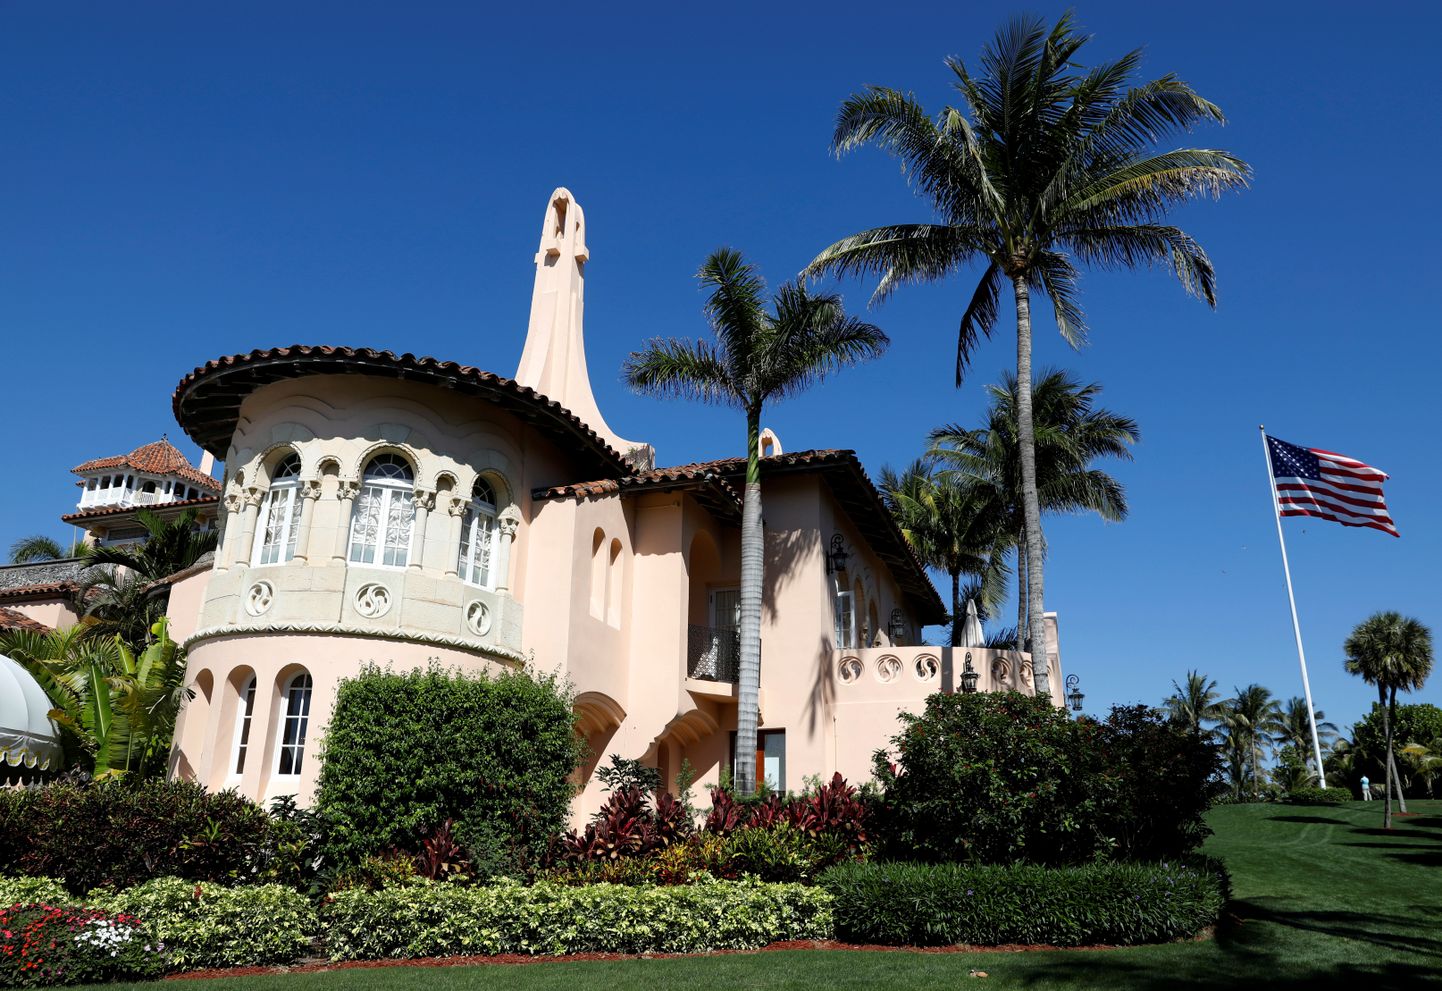 Donald Trumpi Mar-a-Lago villa Floridas Palm Beachis